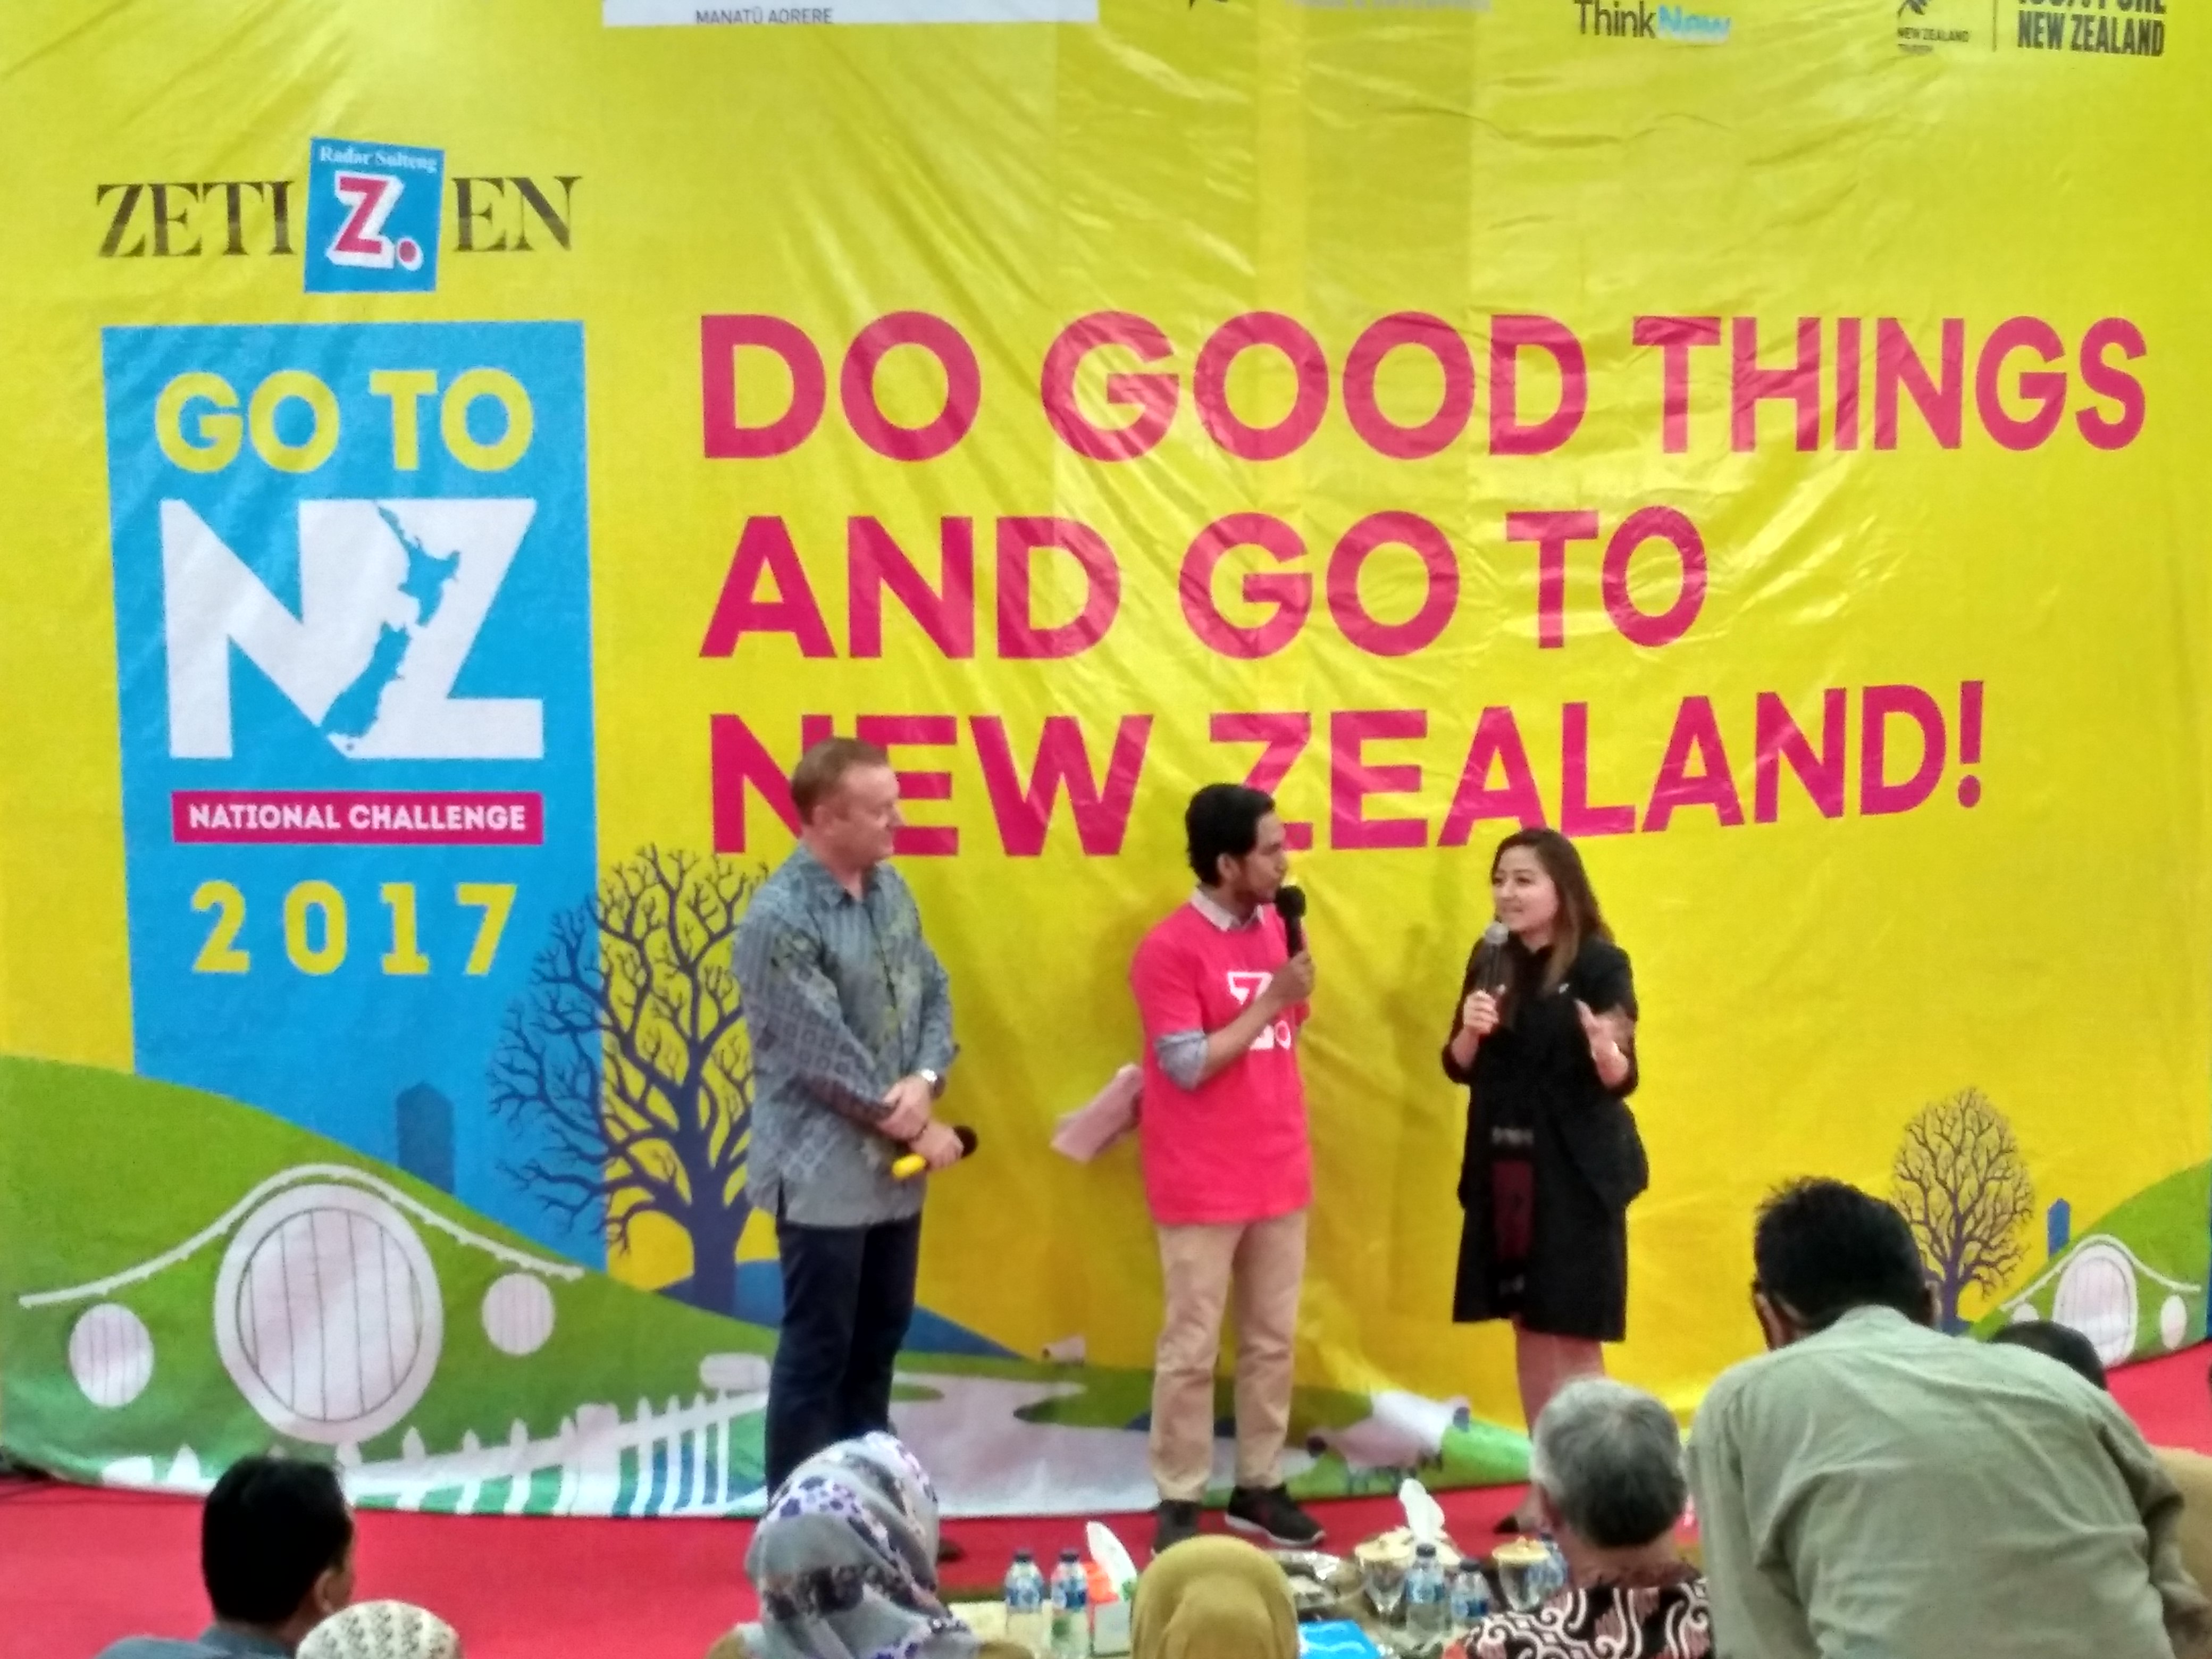 Dubes New Zealand Untuk Indonesia Hadiri Zetizen National Challenge 2017 Di Untad